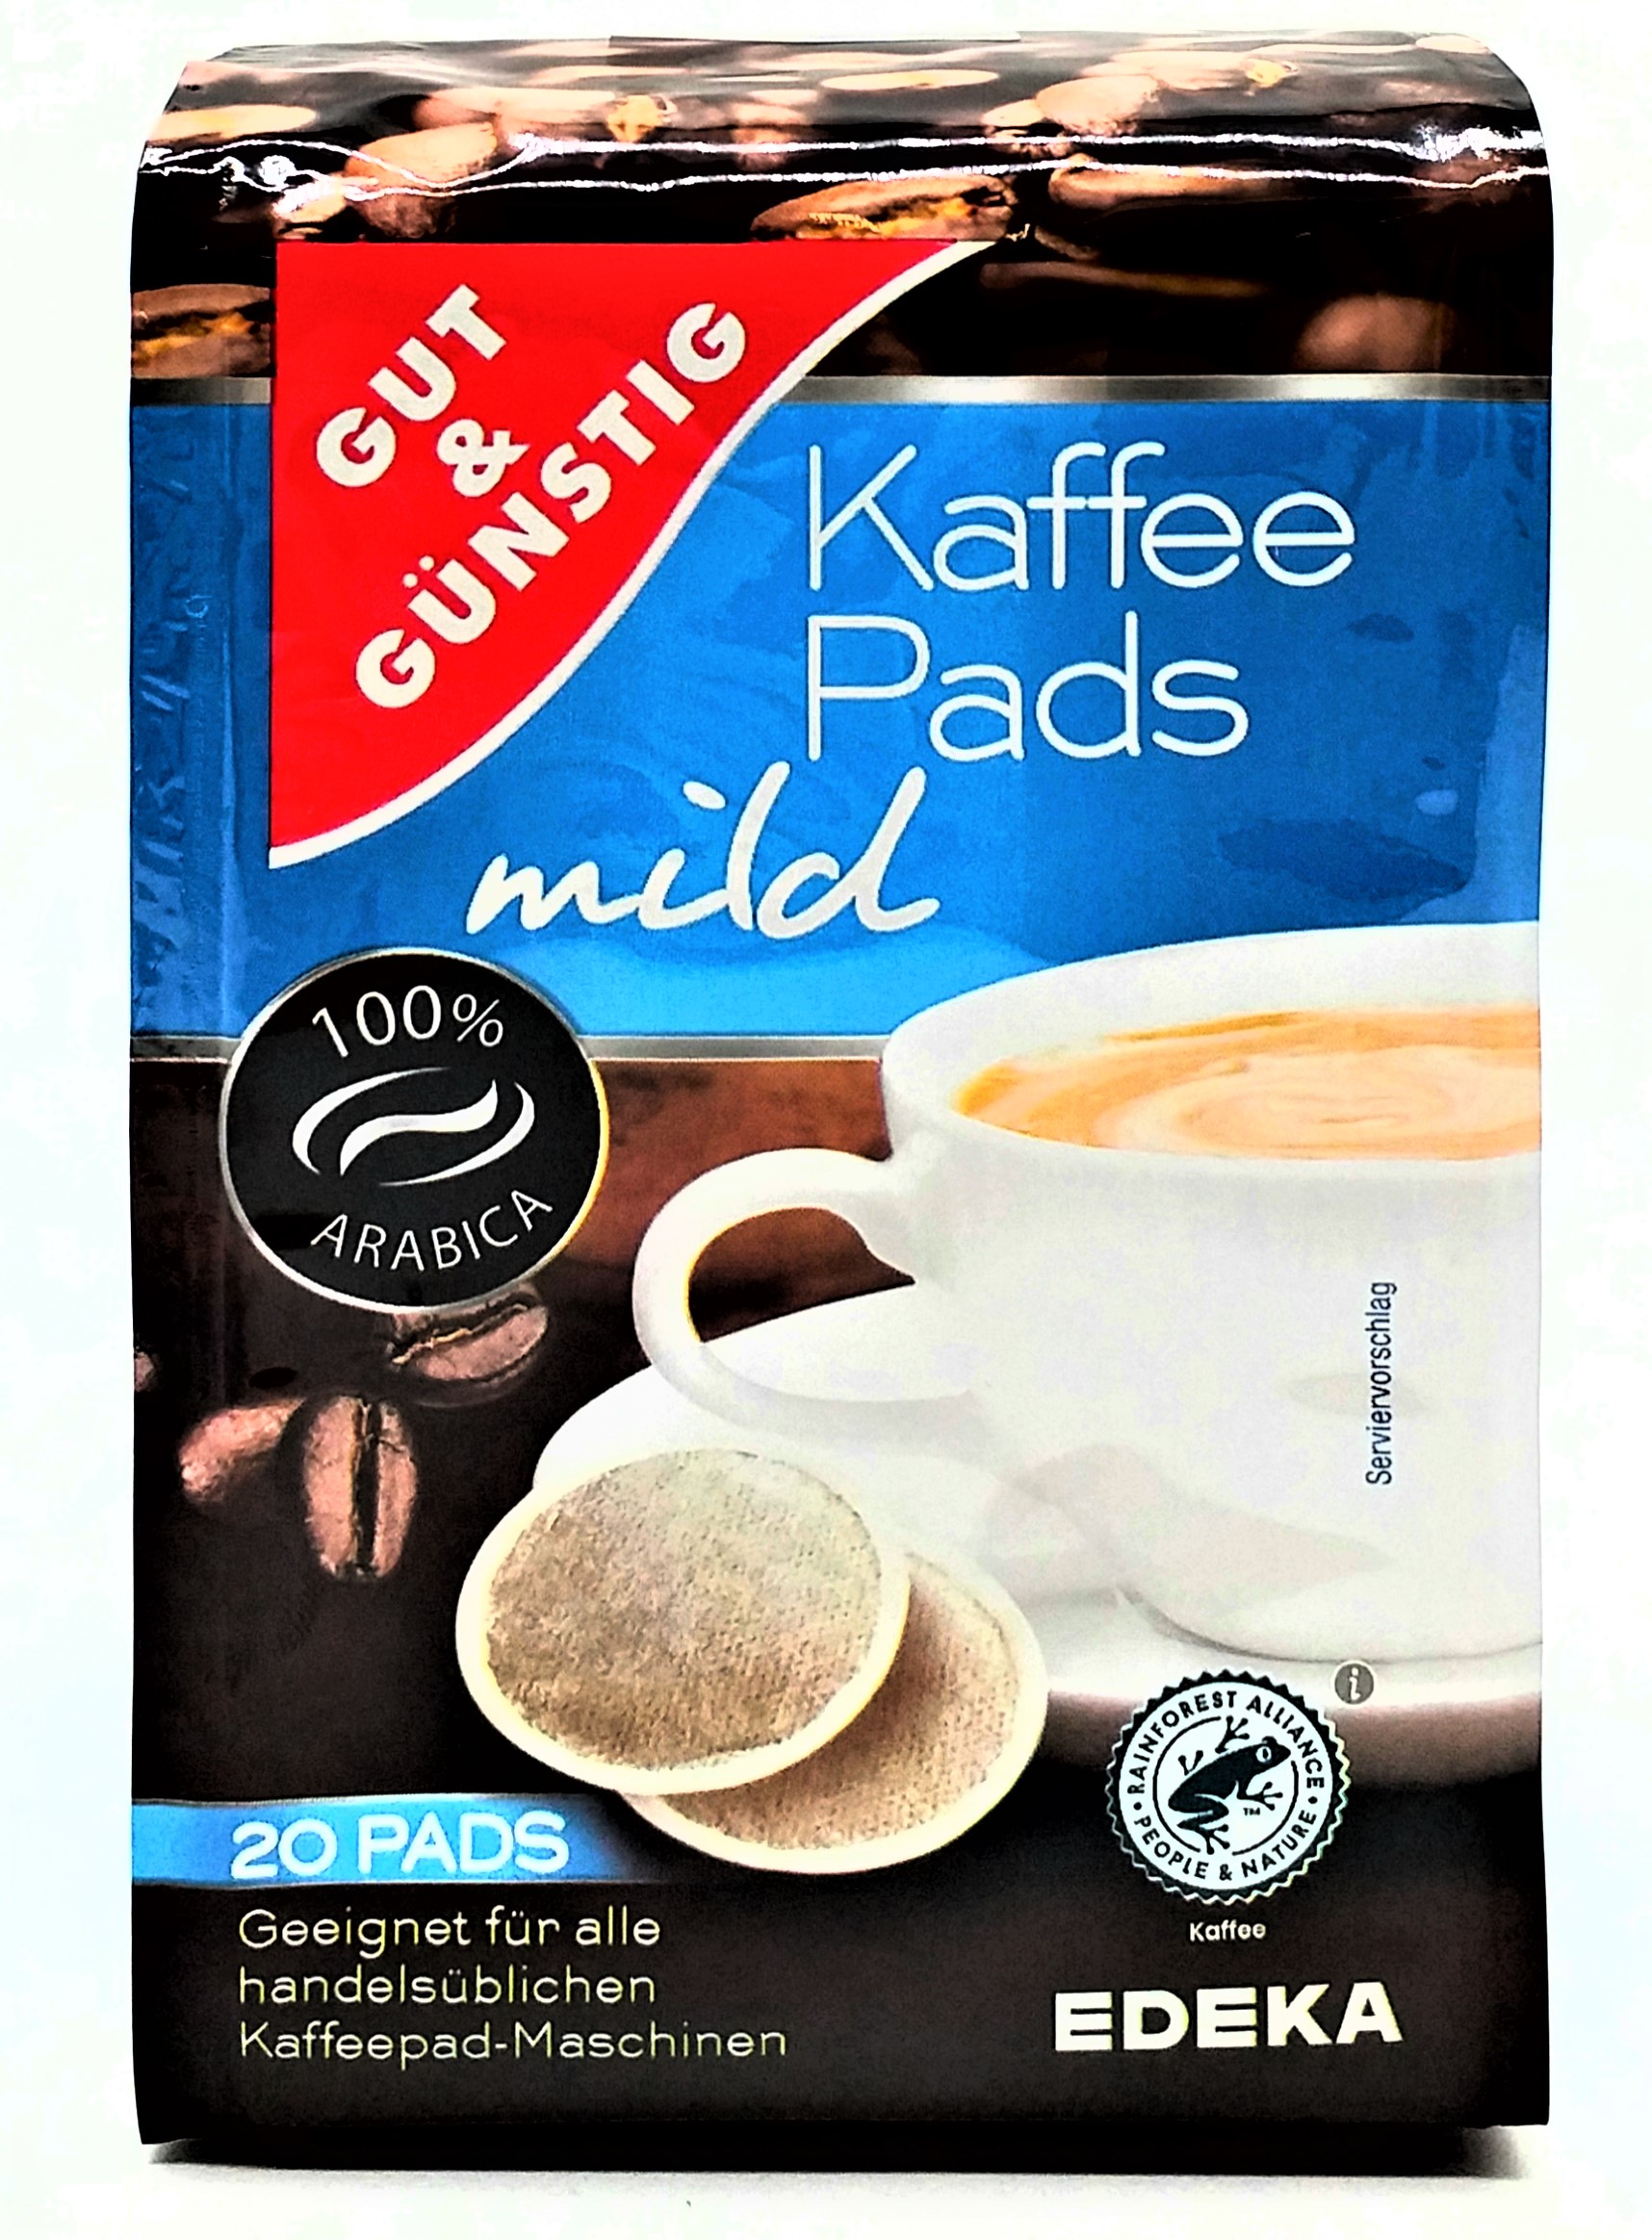 G&G Kaffee-Pads mild 20 Pads, gesamt 144g